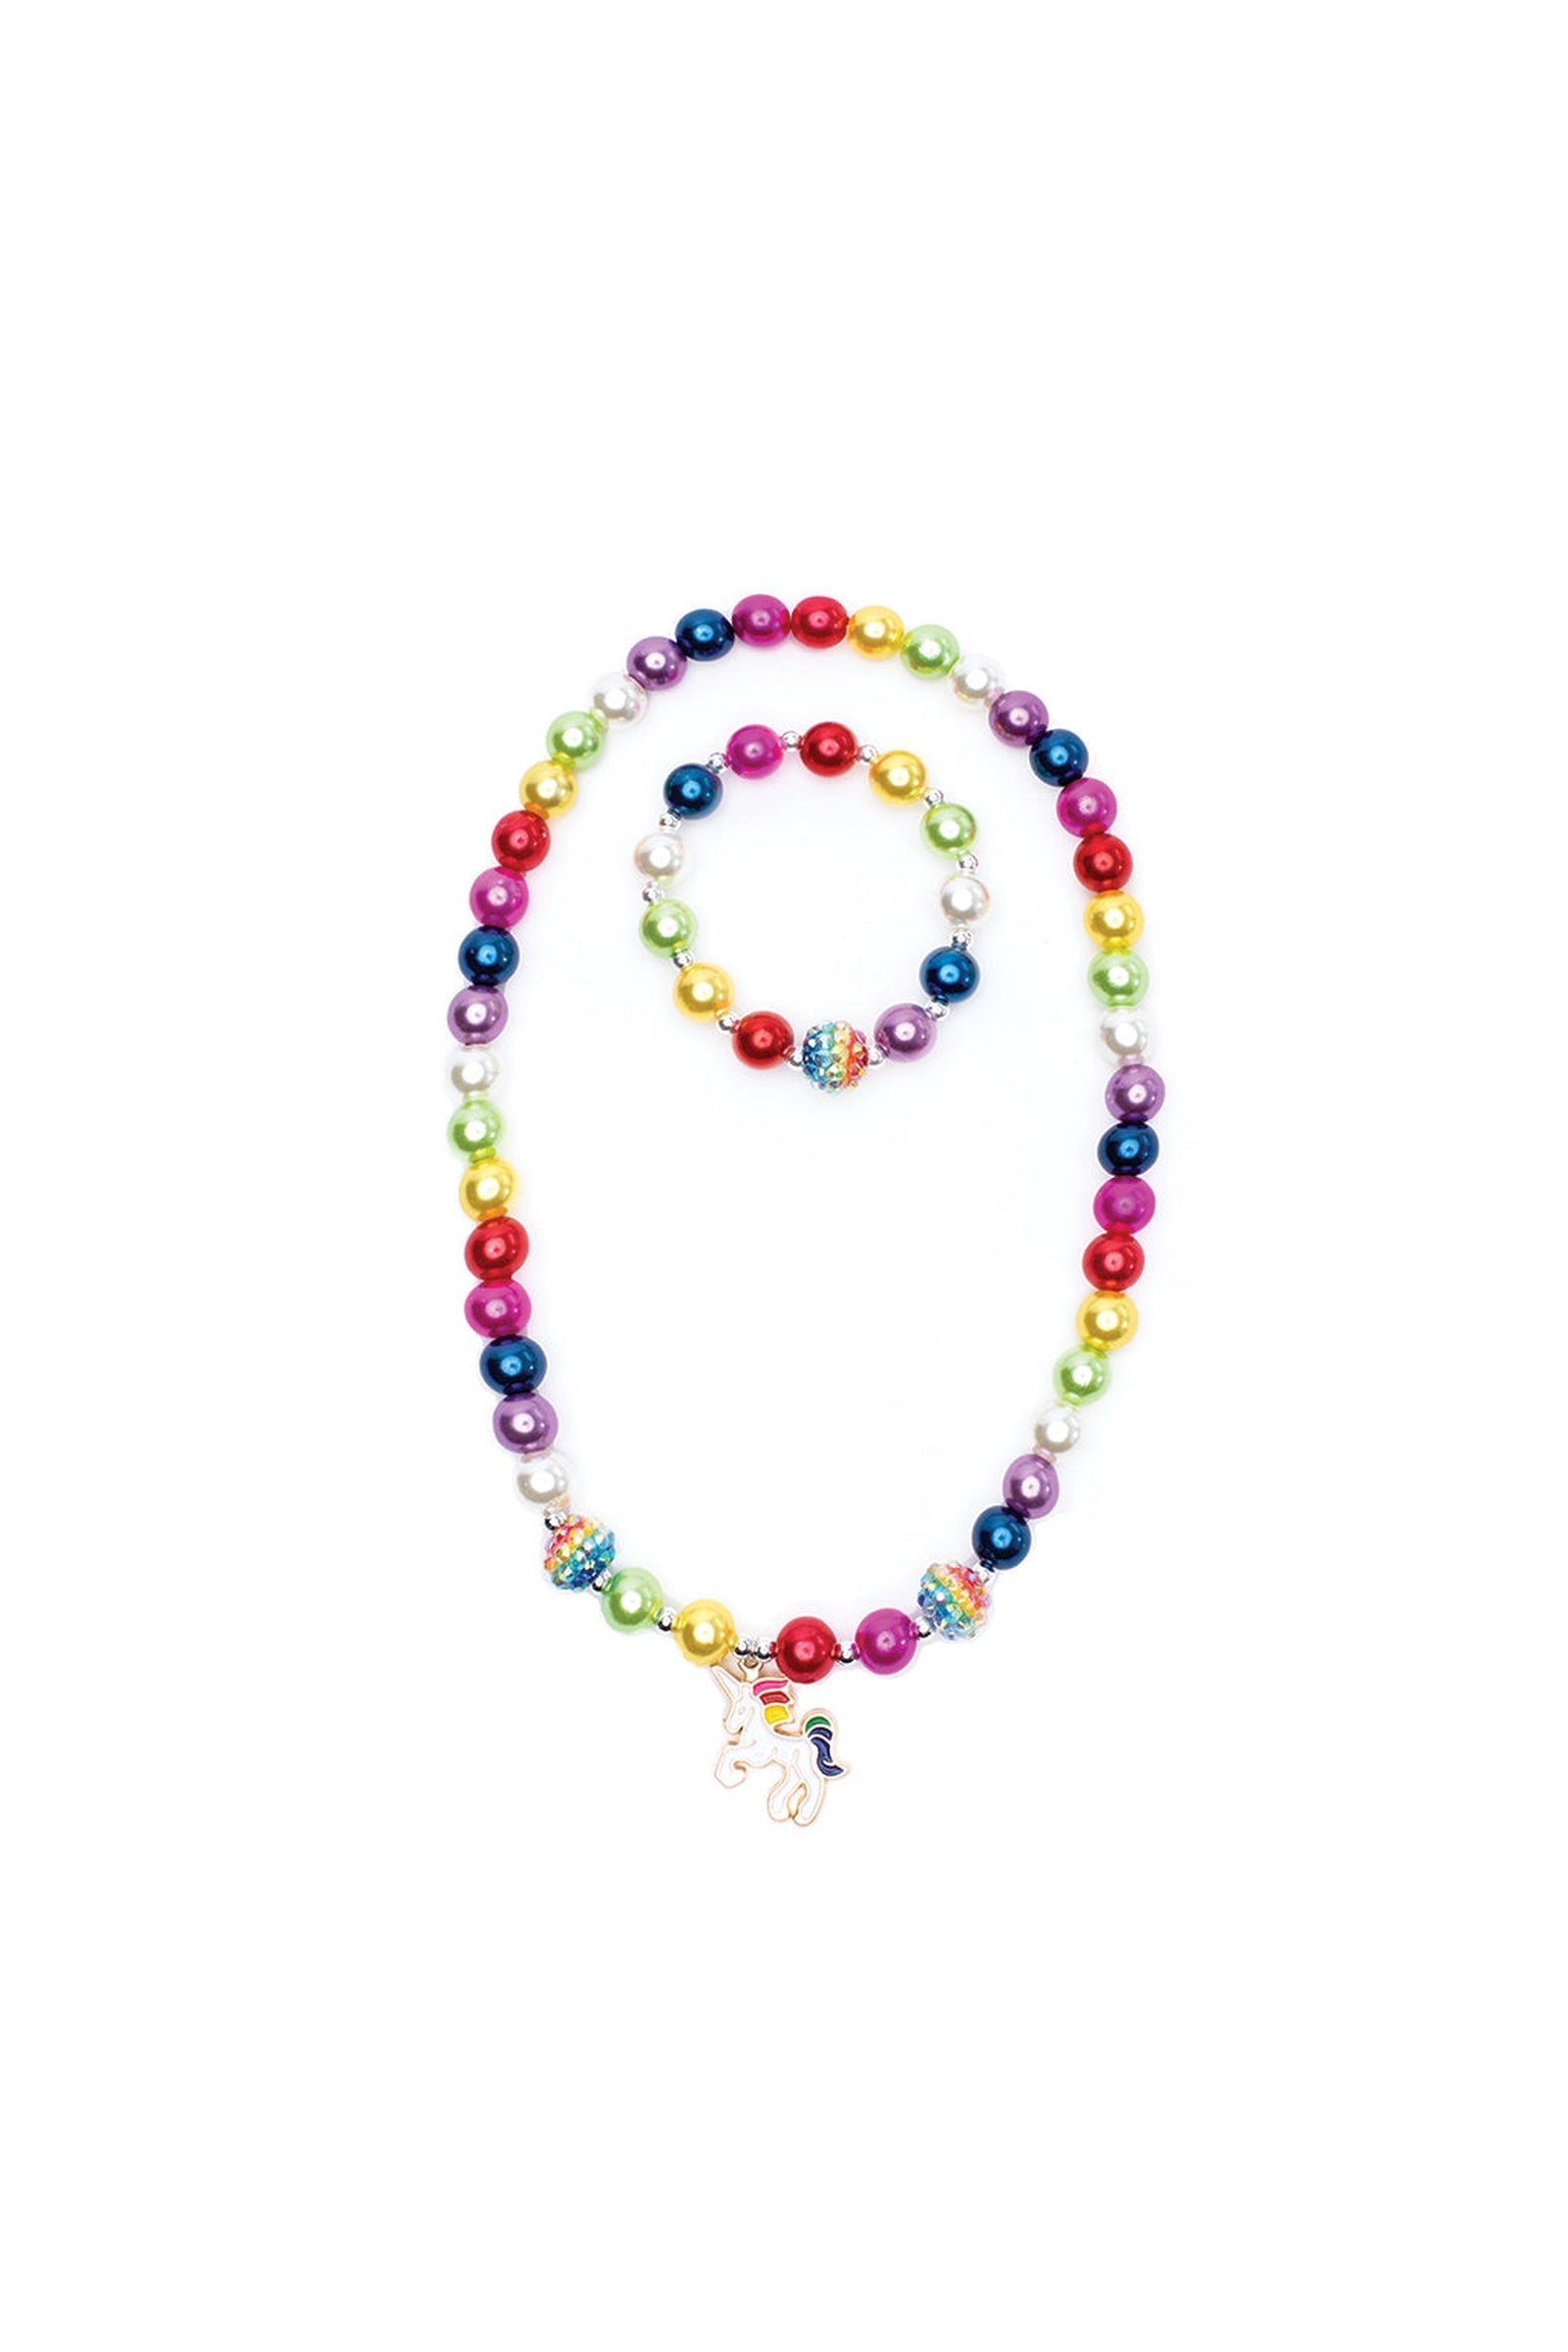 Gumball Rainbow Necklace & Bracelet Set